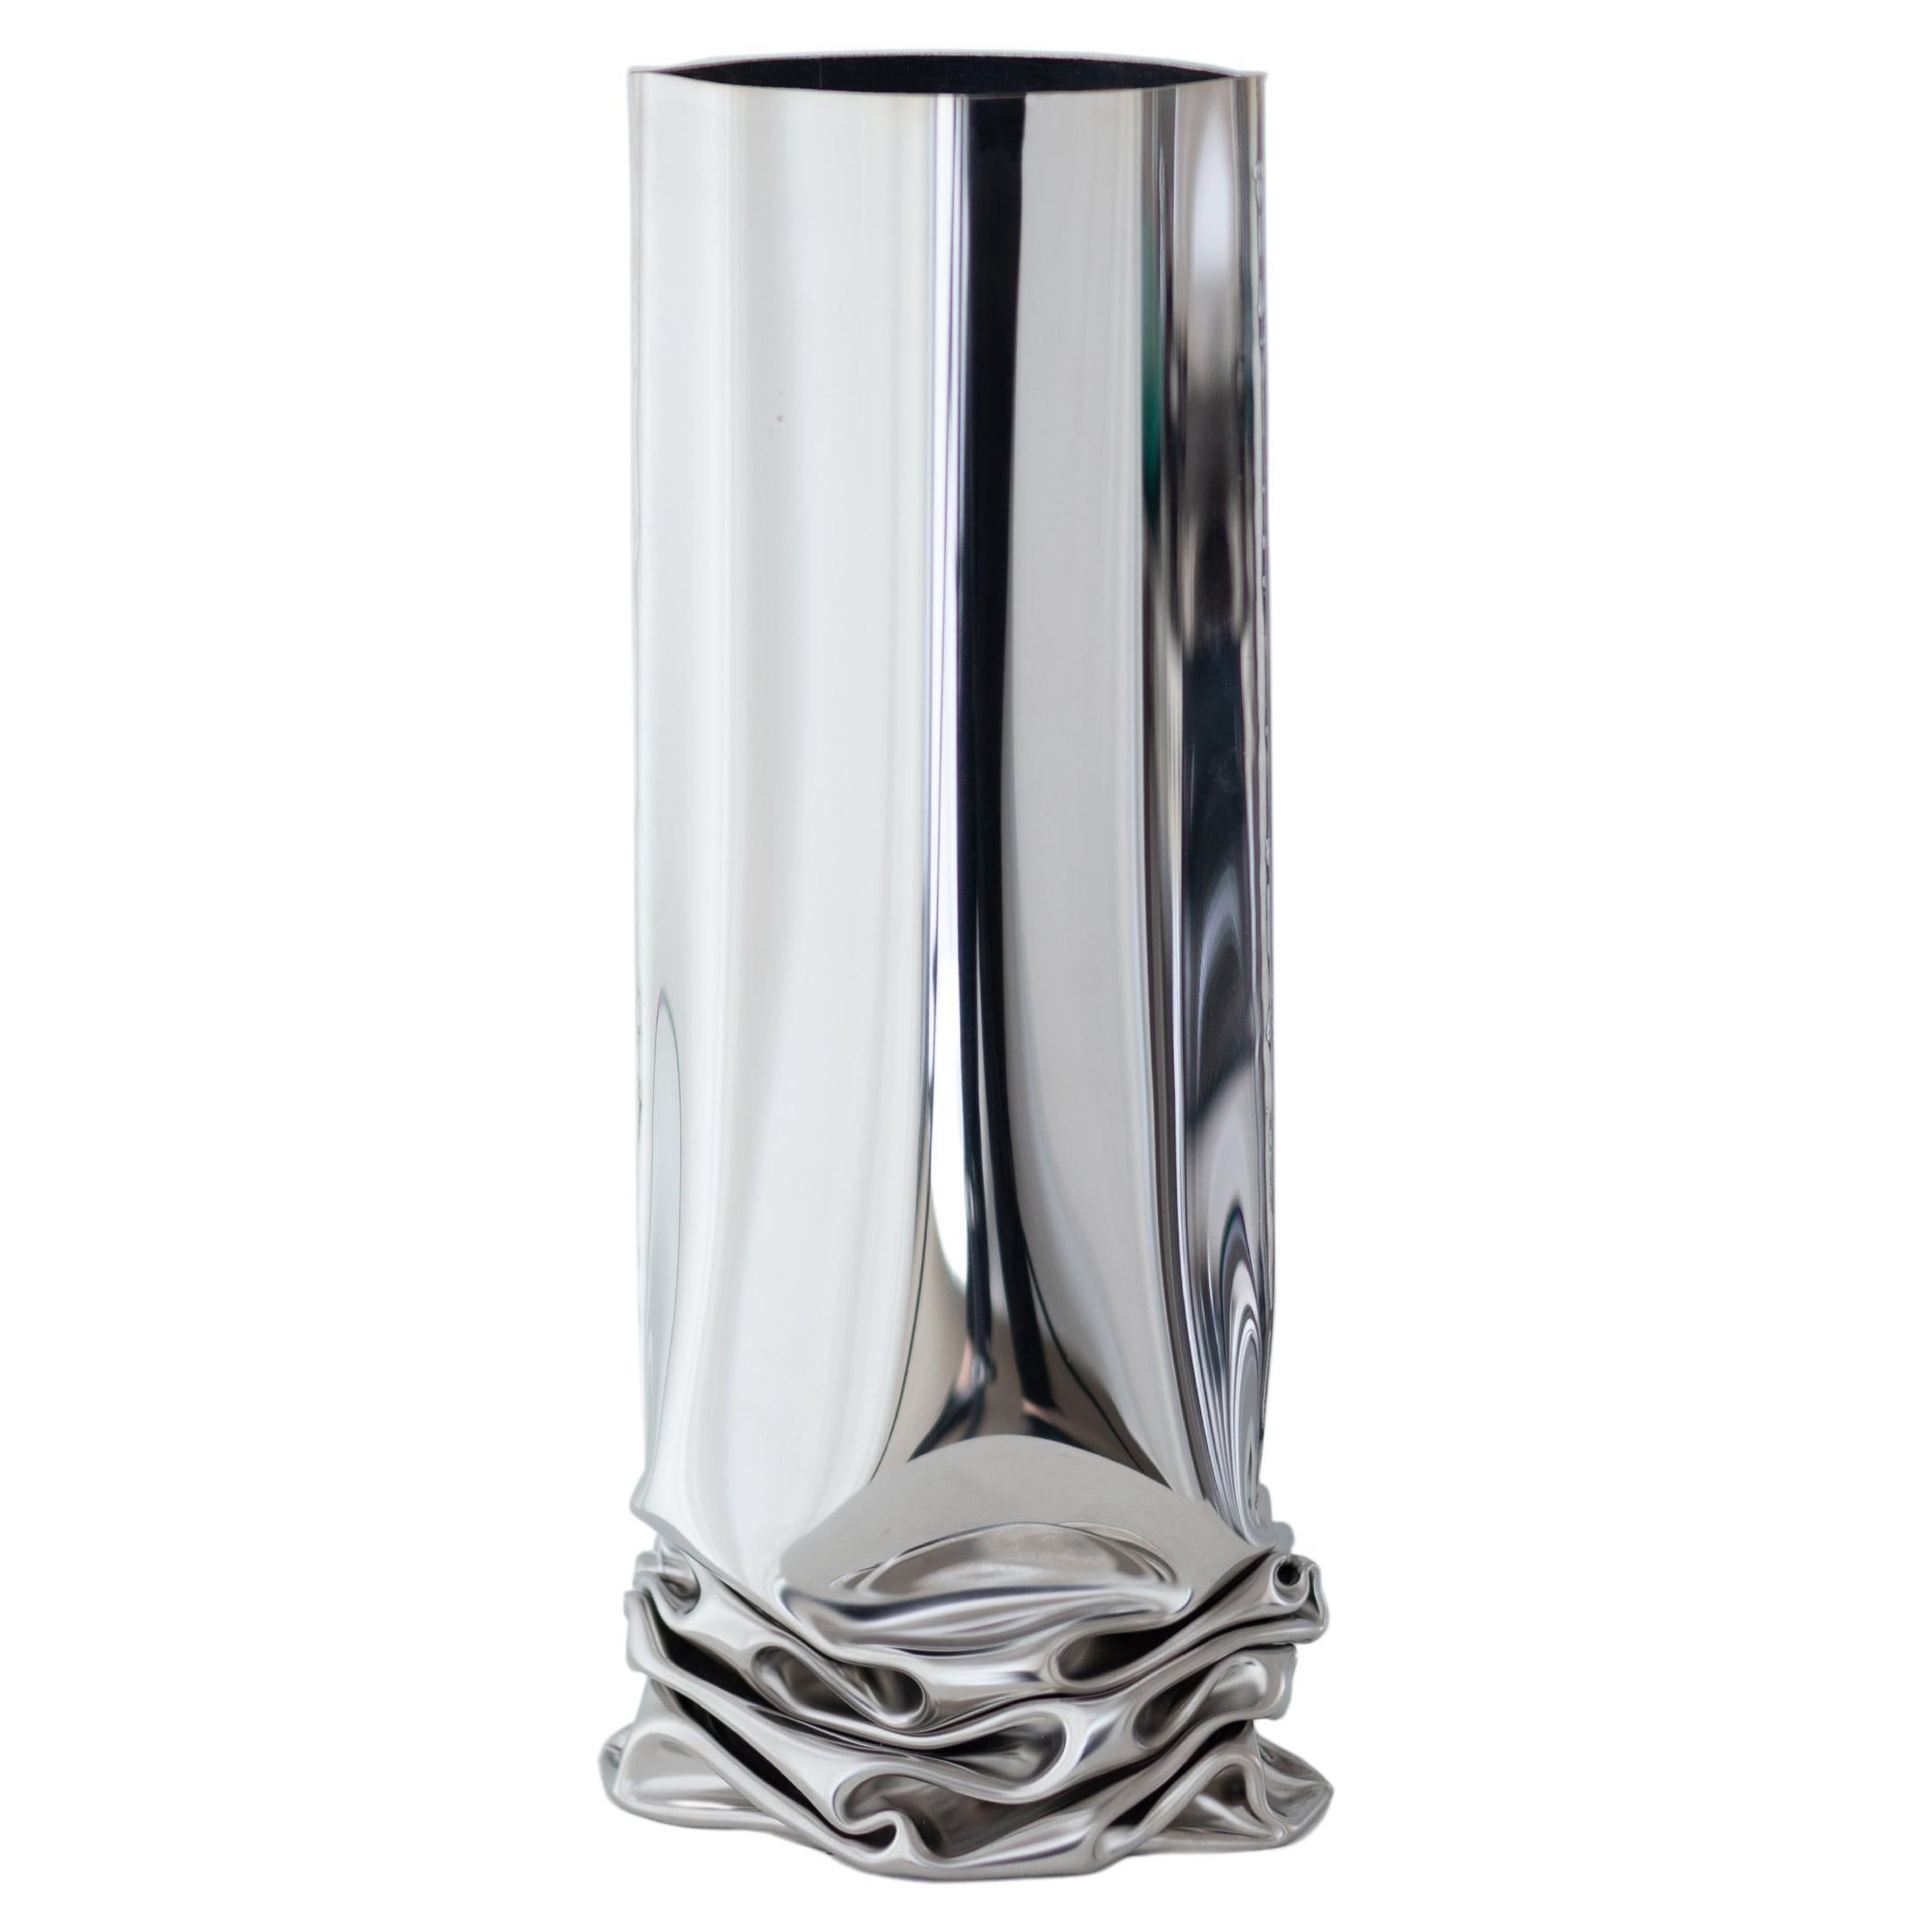 Contemporary Vase, 'Crash Vase' by Zieta, Medium, Stainless Steel For Sale